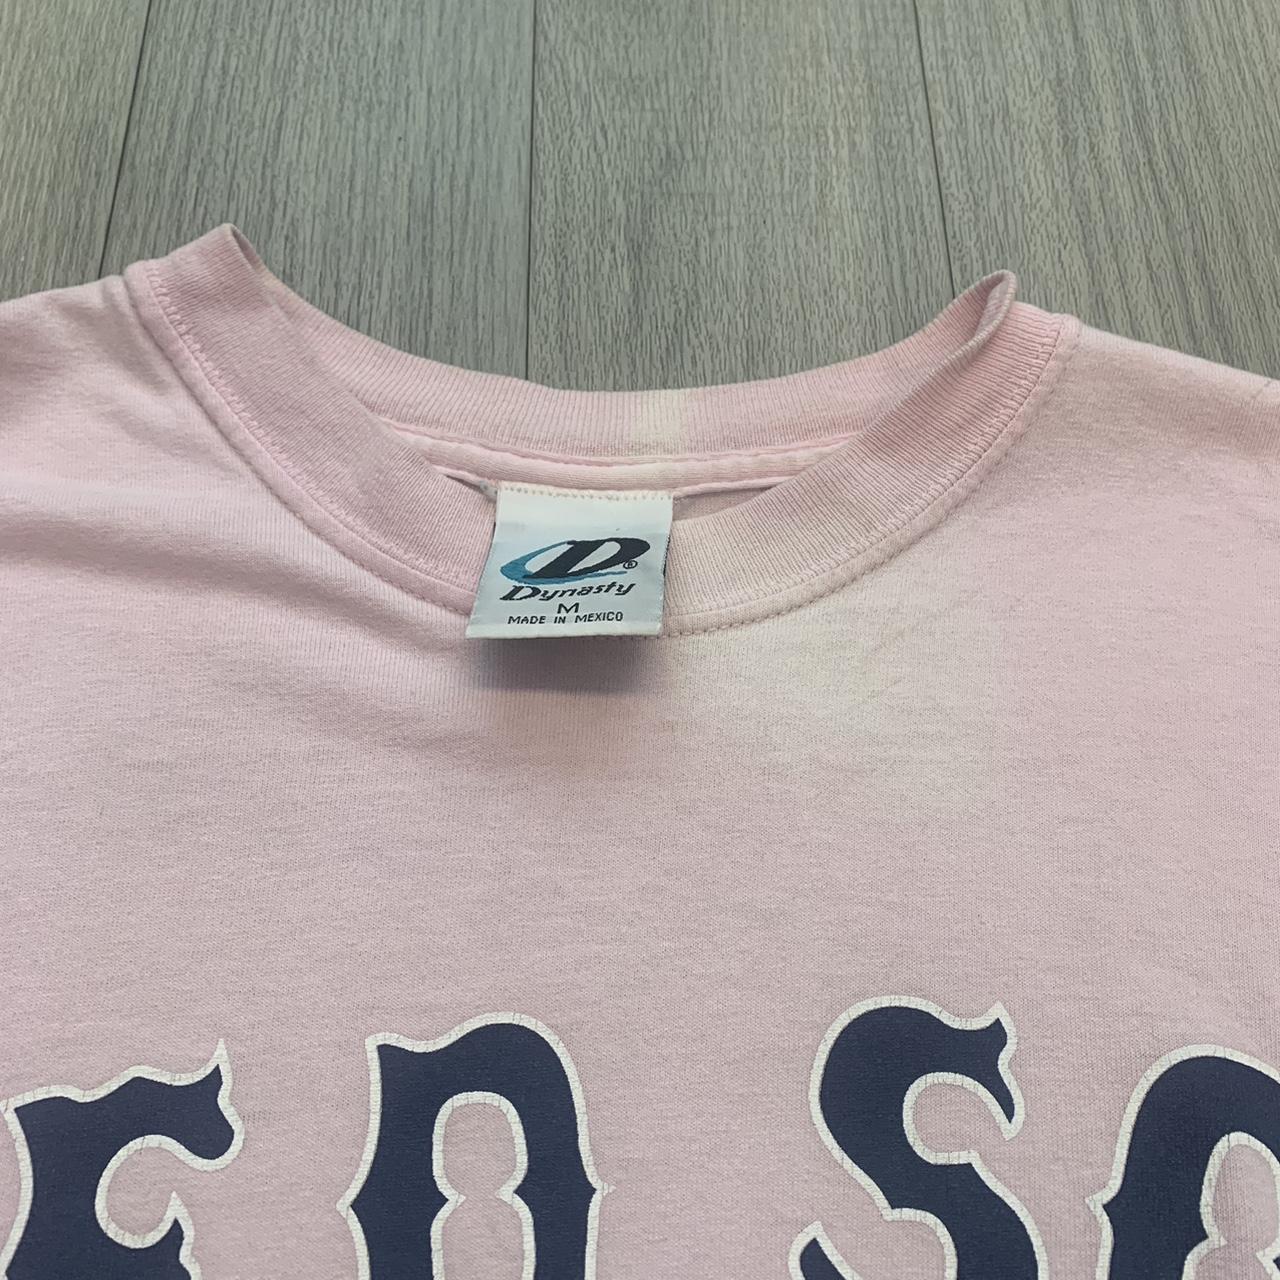 Dynasty Men's T-Shirt - Pink - M